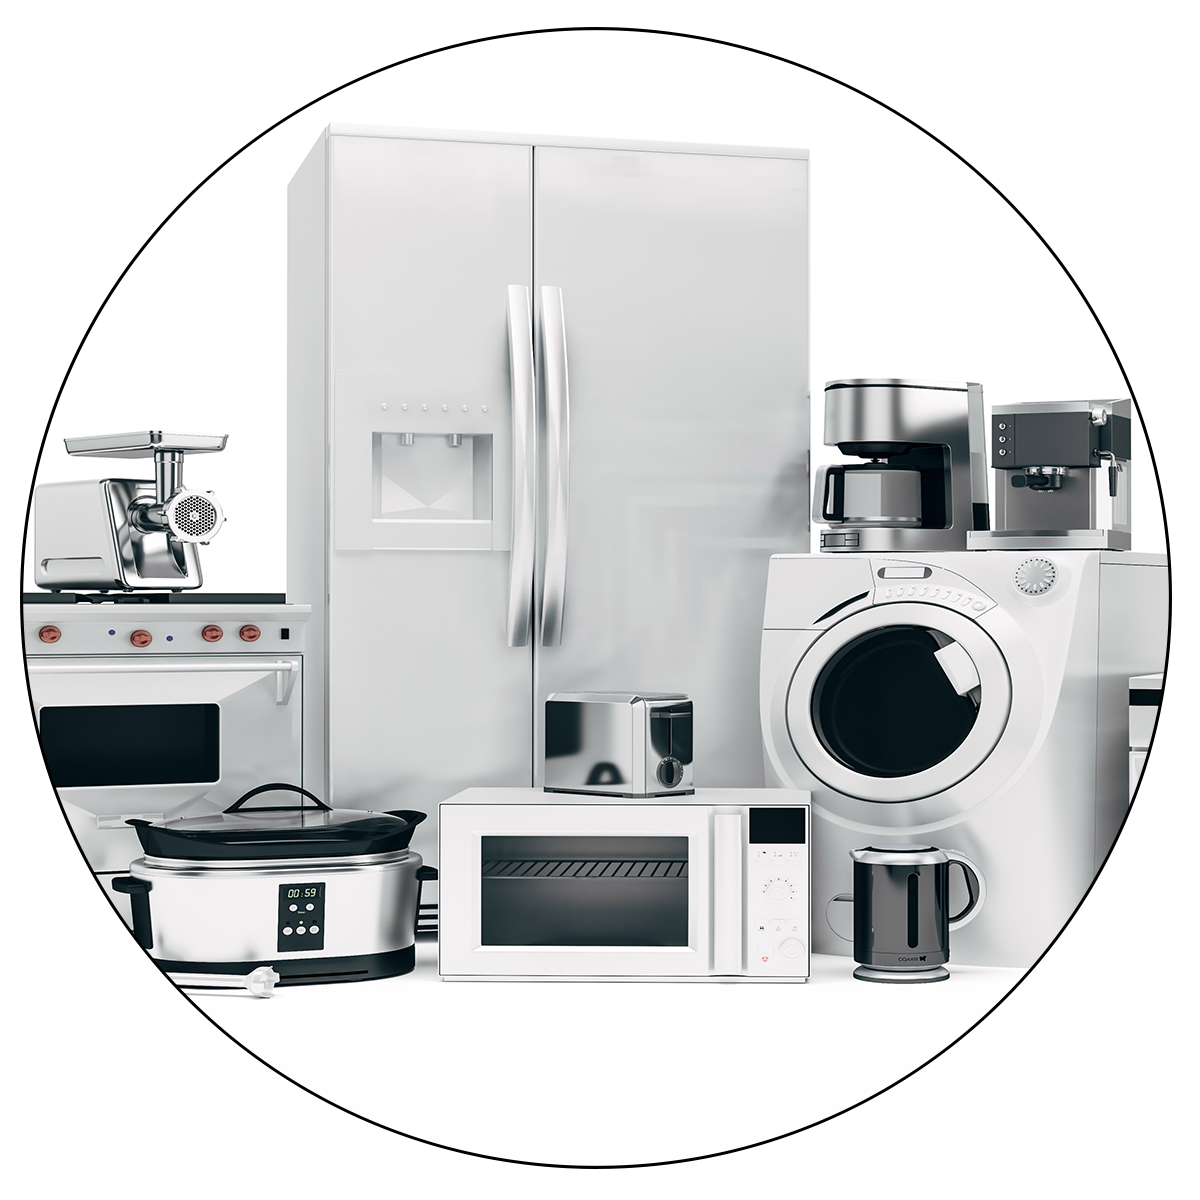 sensors in domestic appliances